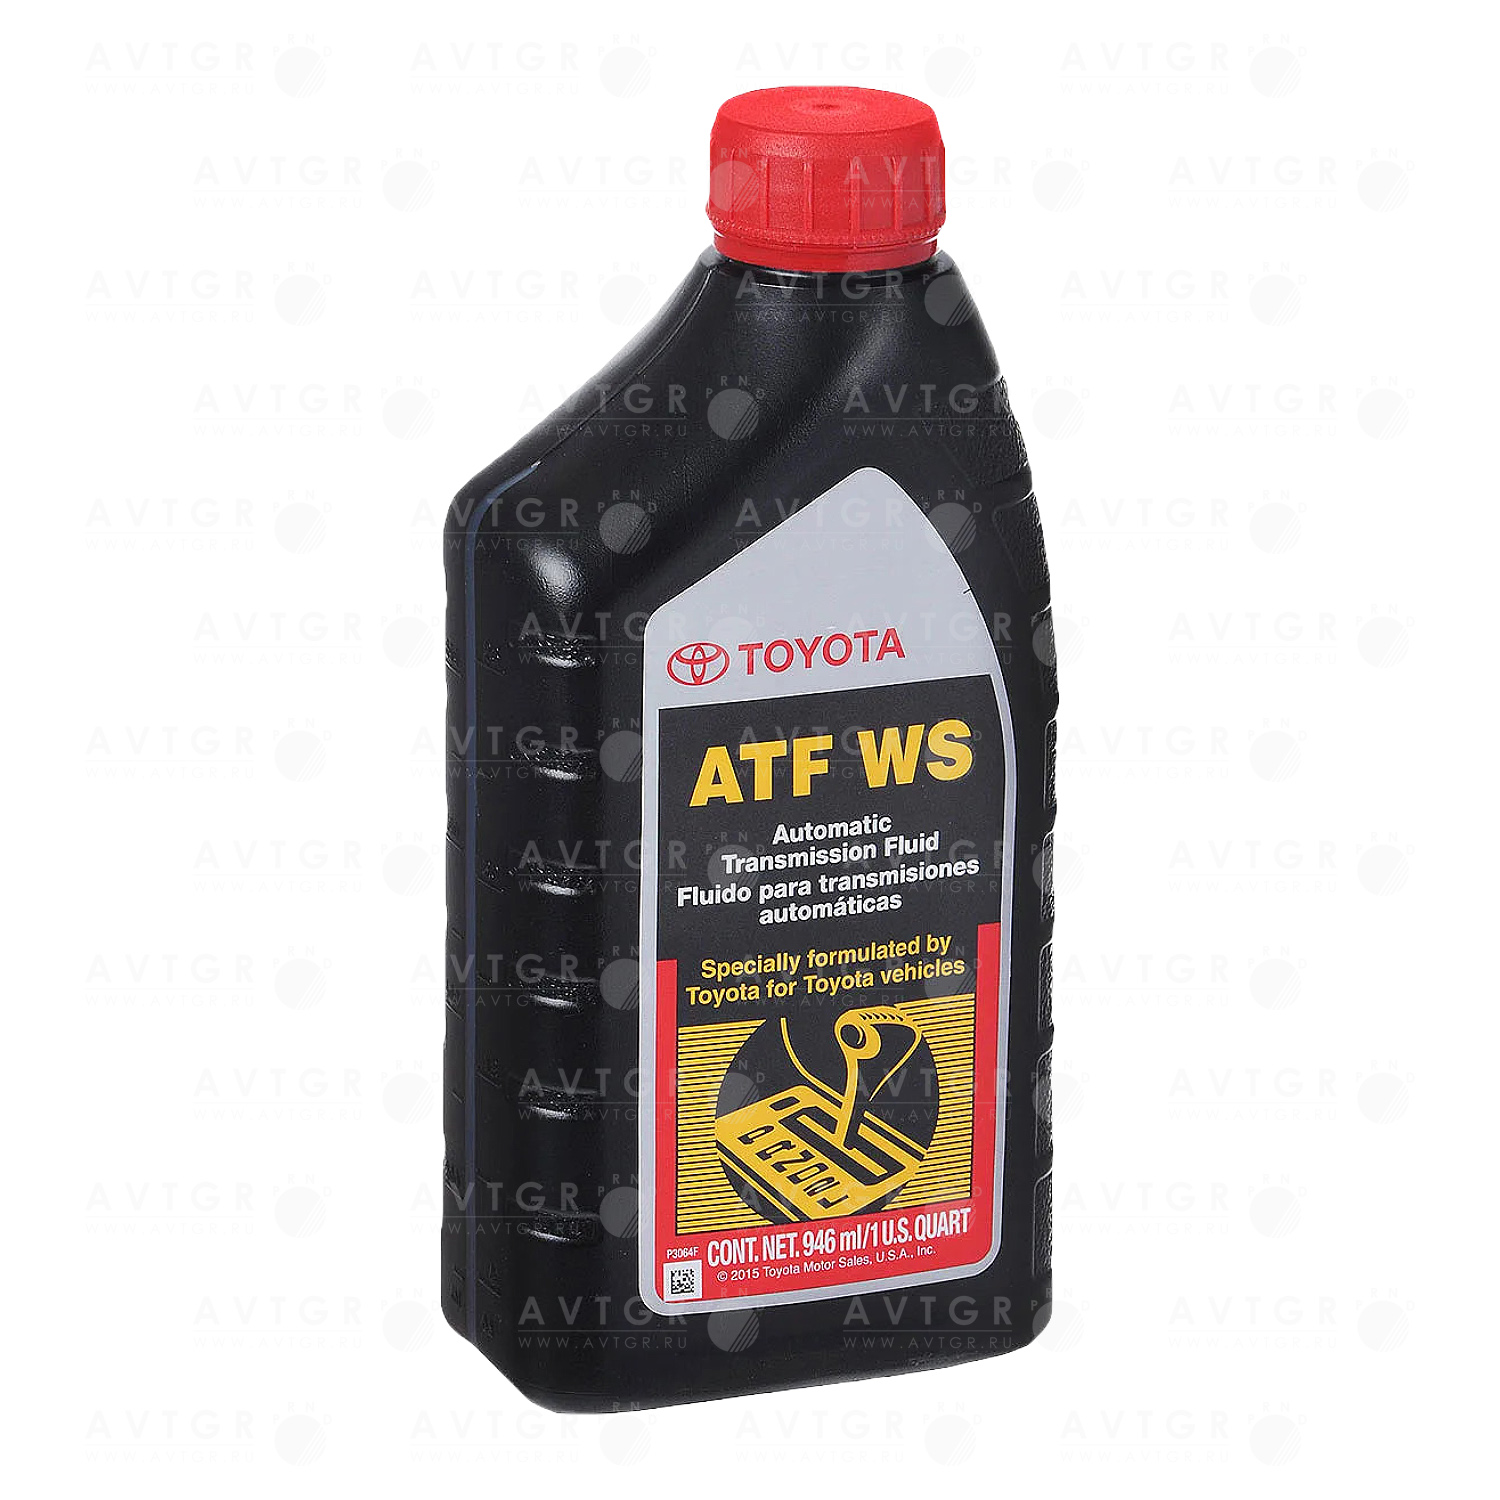 Акпп atf ws. ATF Toyota WS 00289-ATFWS. Toyota ATF WS 0.946 Л.. Toyota ATF WS. Трансмиссионное масло Toyota ATF WS 0.946Л.